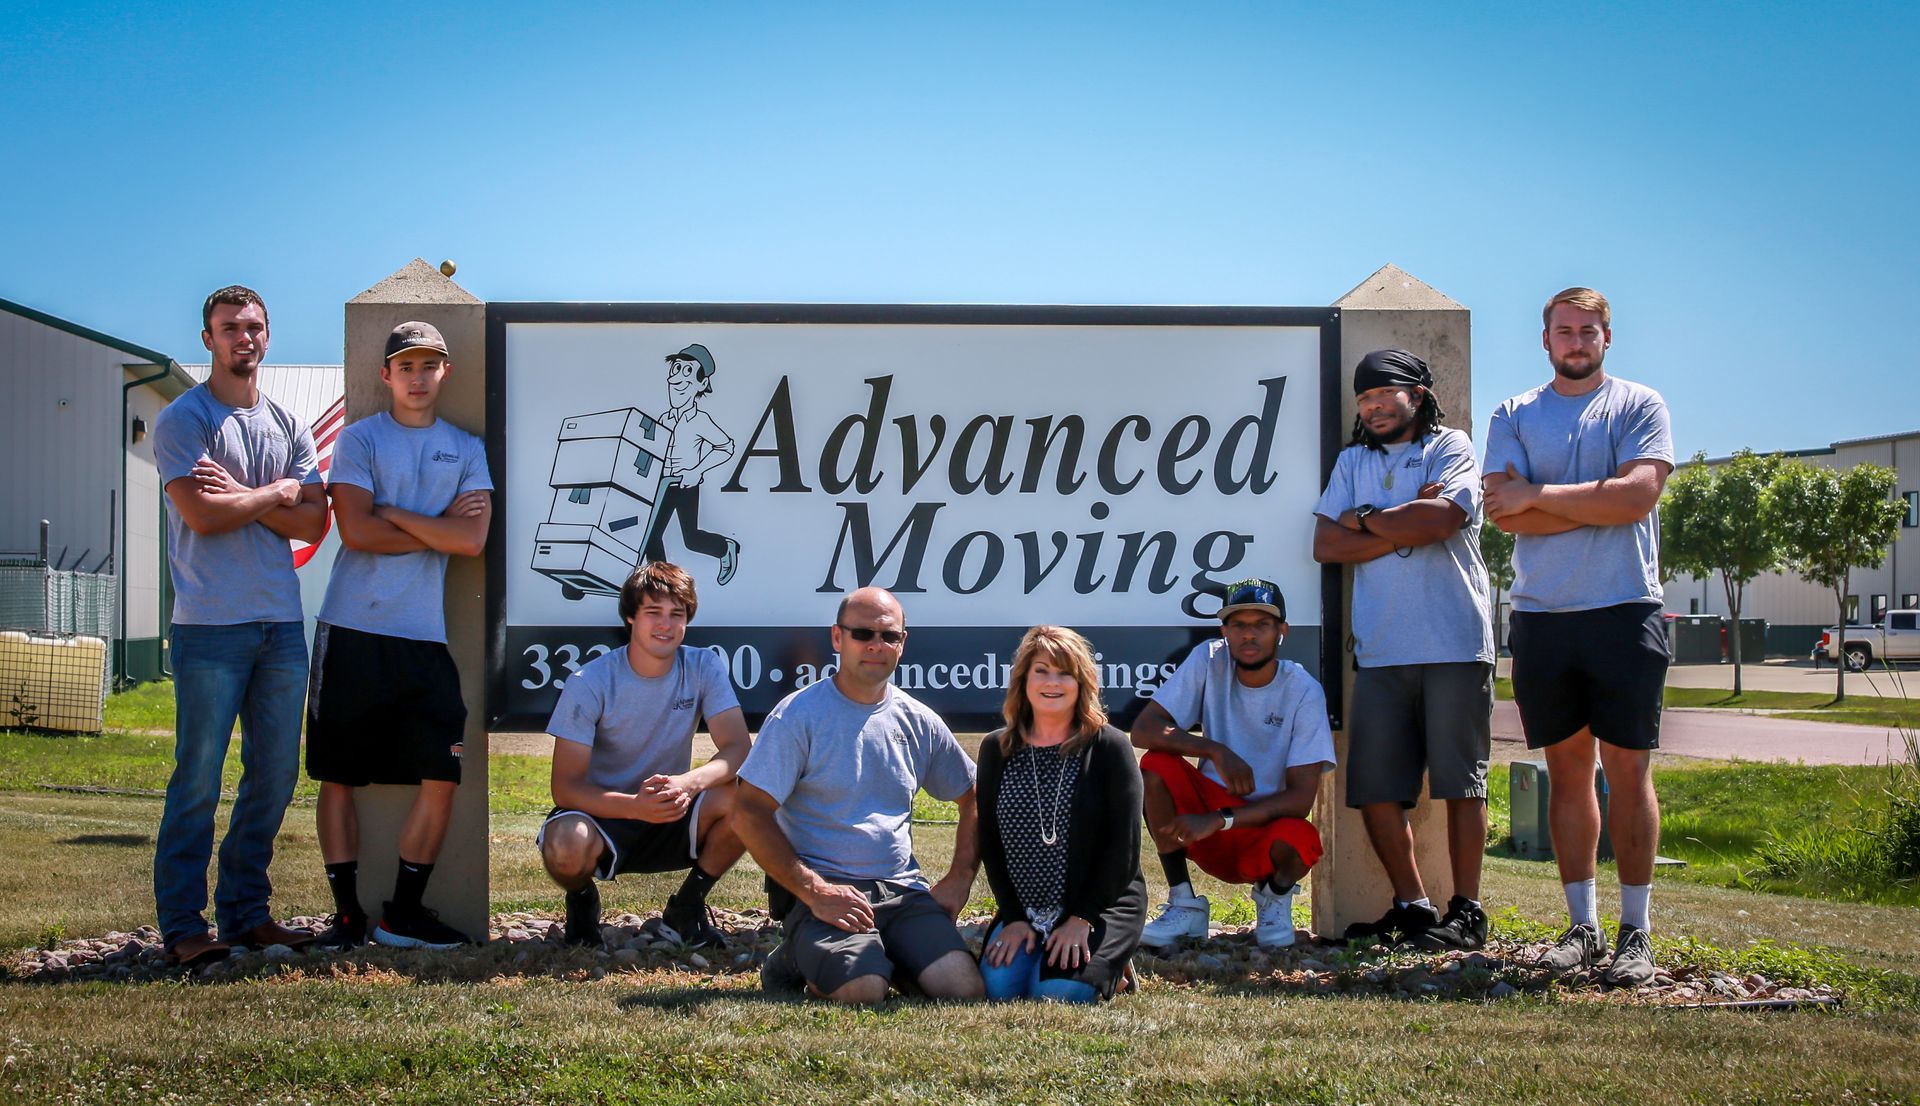 The Advanced Moving team in Sioux Falls, South Dakota